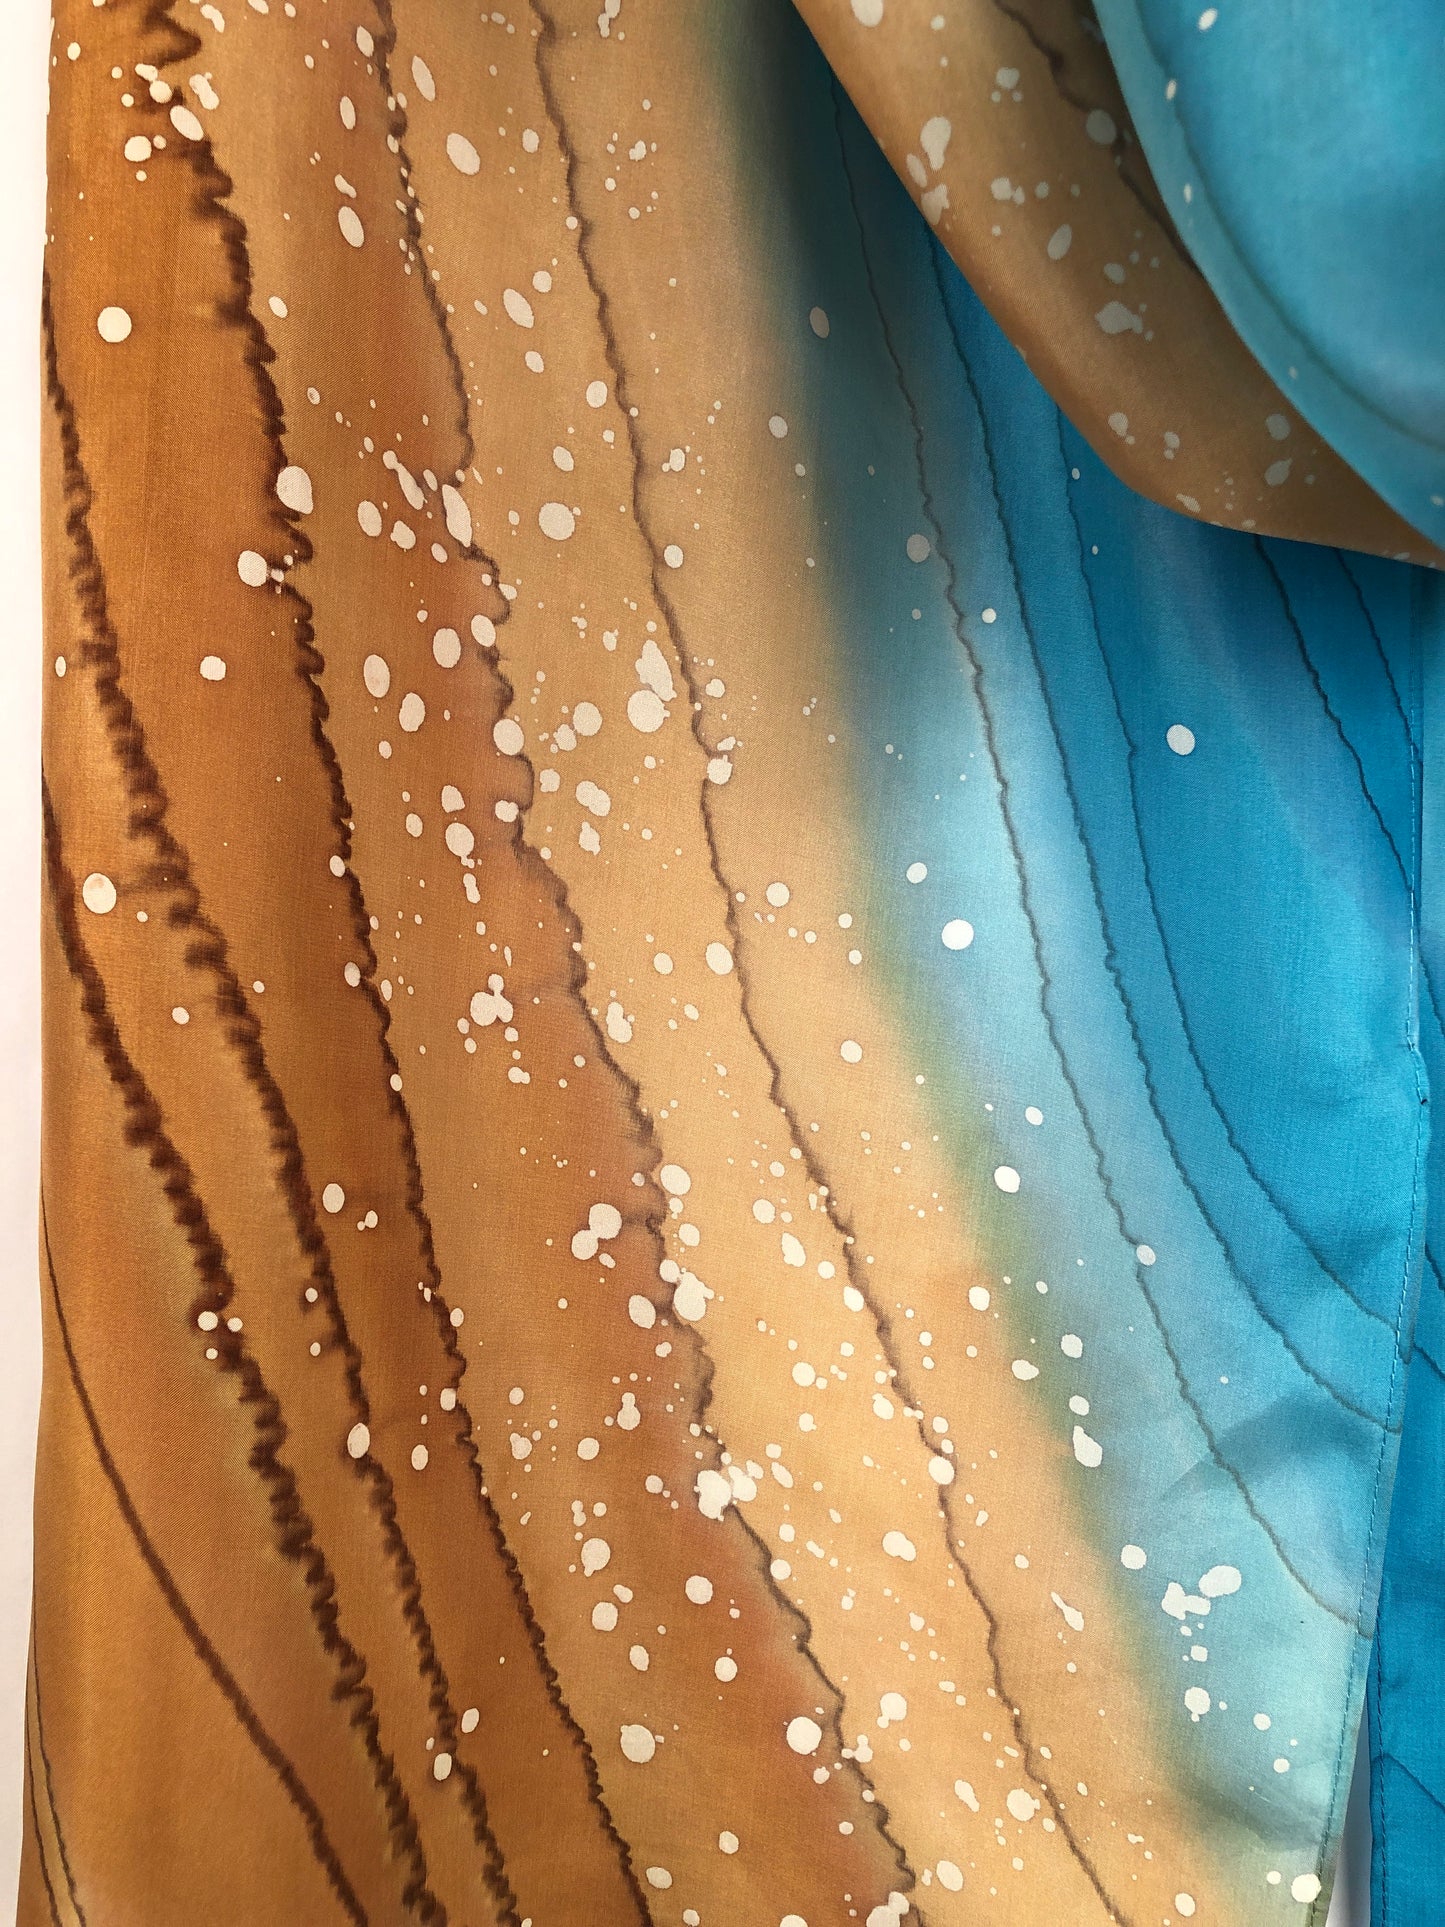 "Surf Zone" - Hand-dyed Silk Scarf - $120